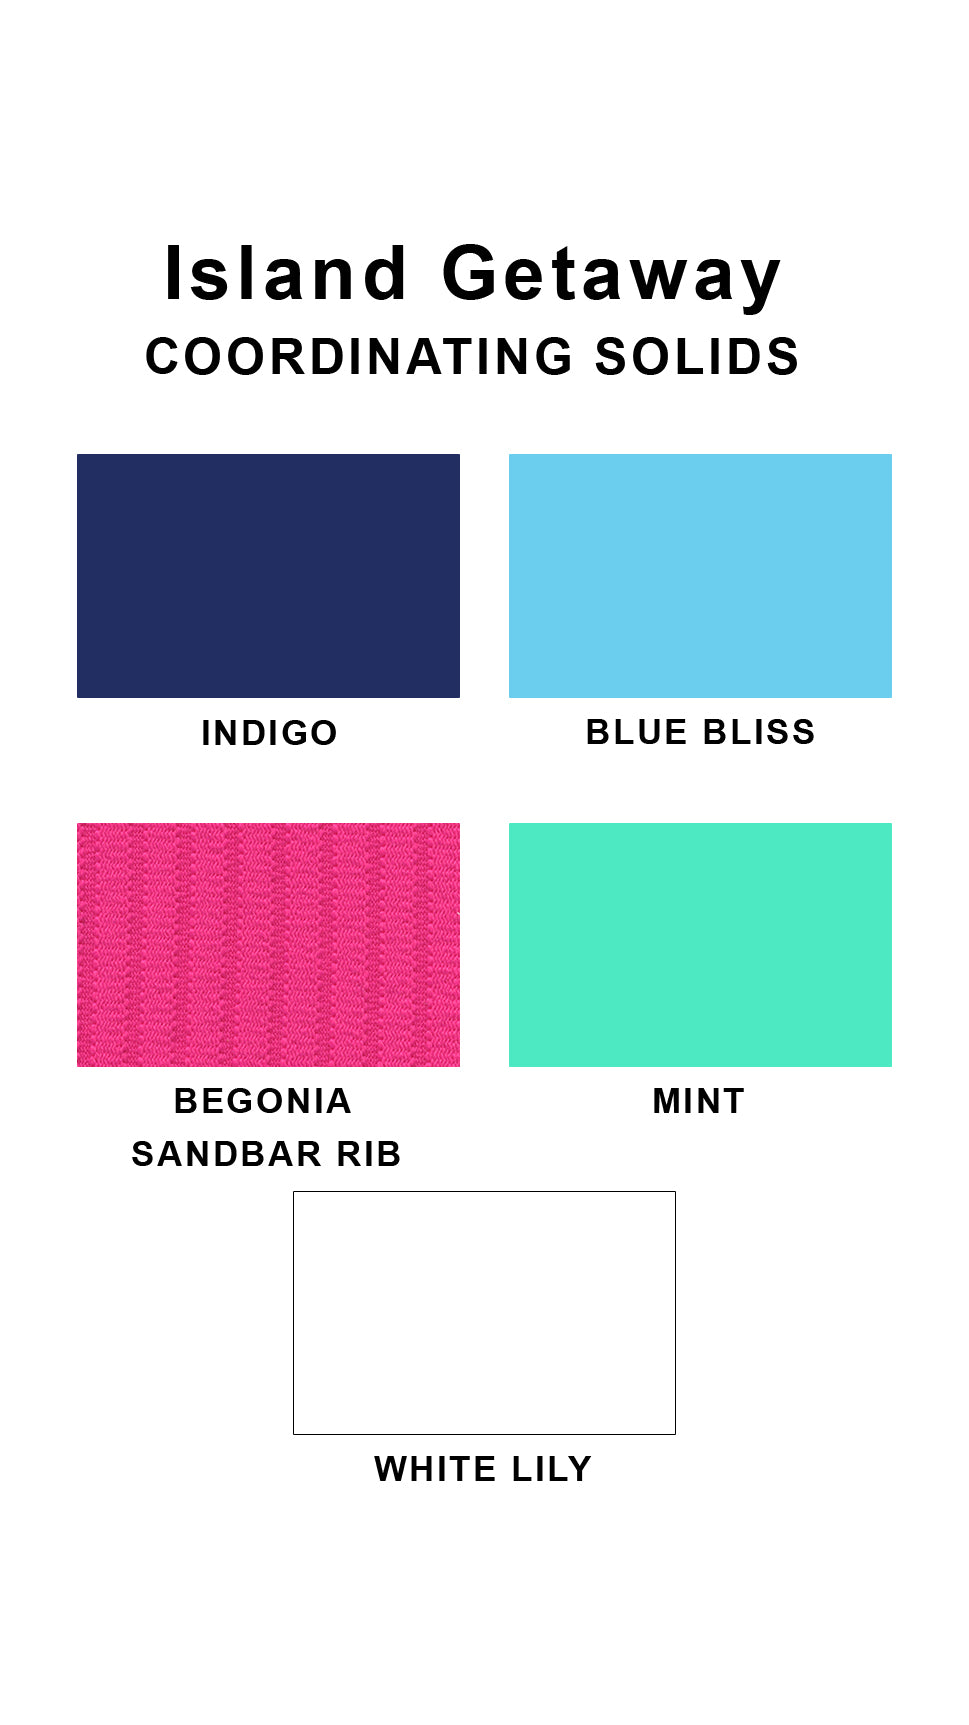 Coordinating solids chart for Island Getaway swimsuit print: Indigo, Blue Bliss, Begonia Sandbar Rib, Mint and White Lily